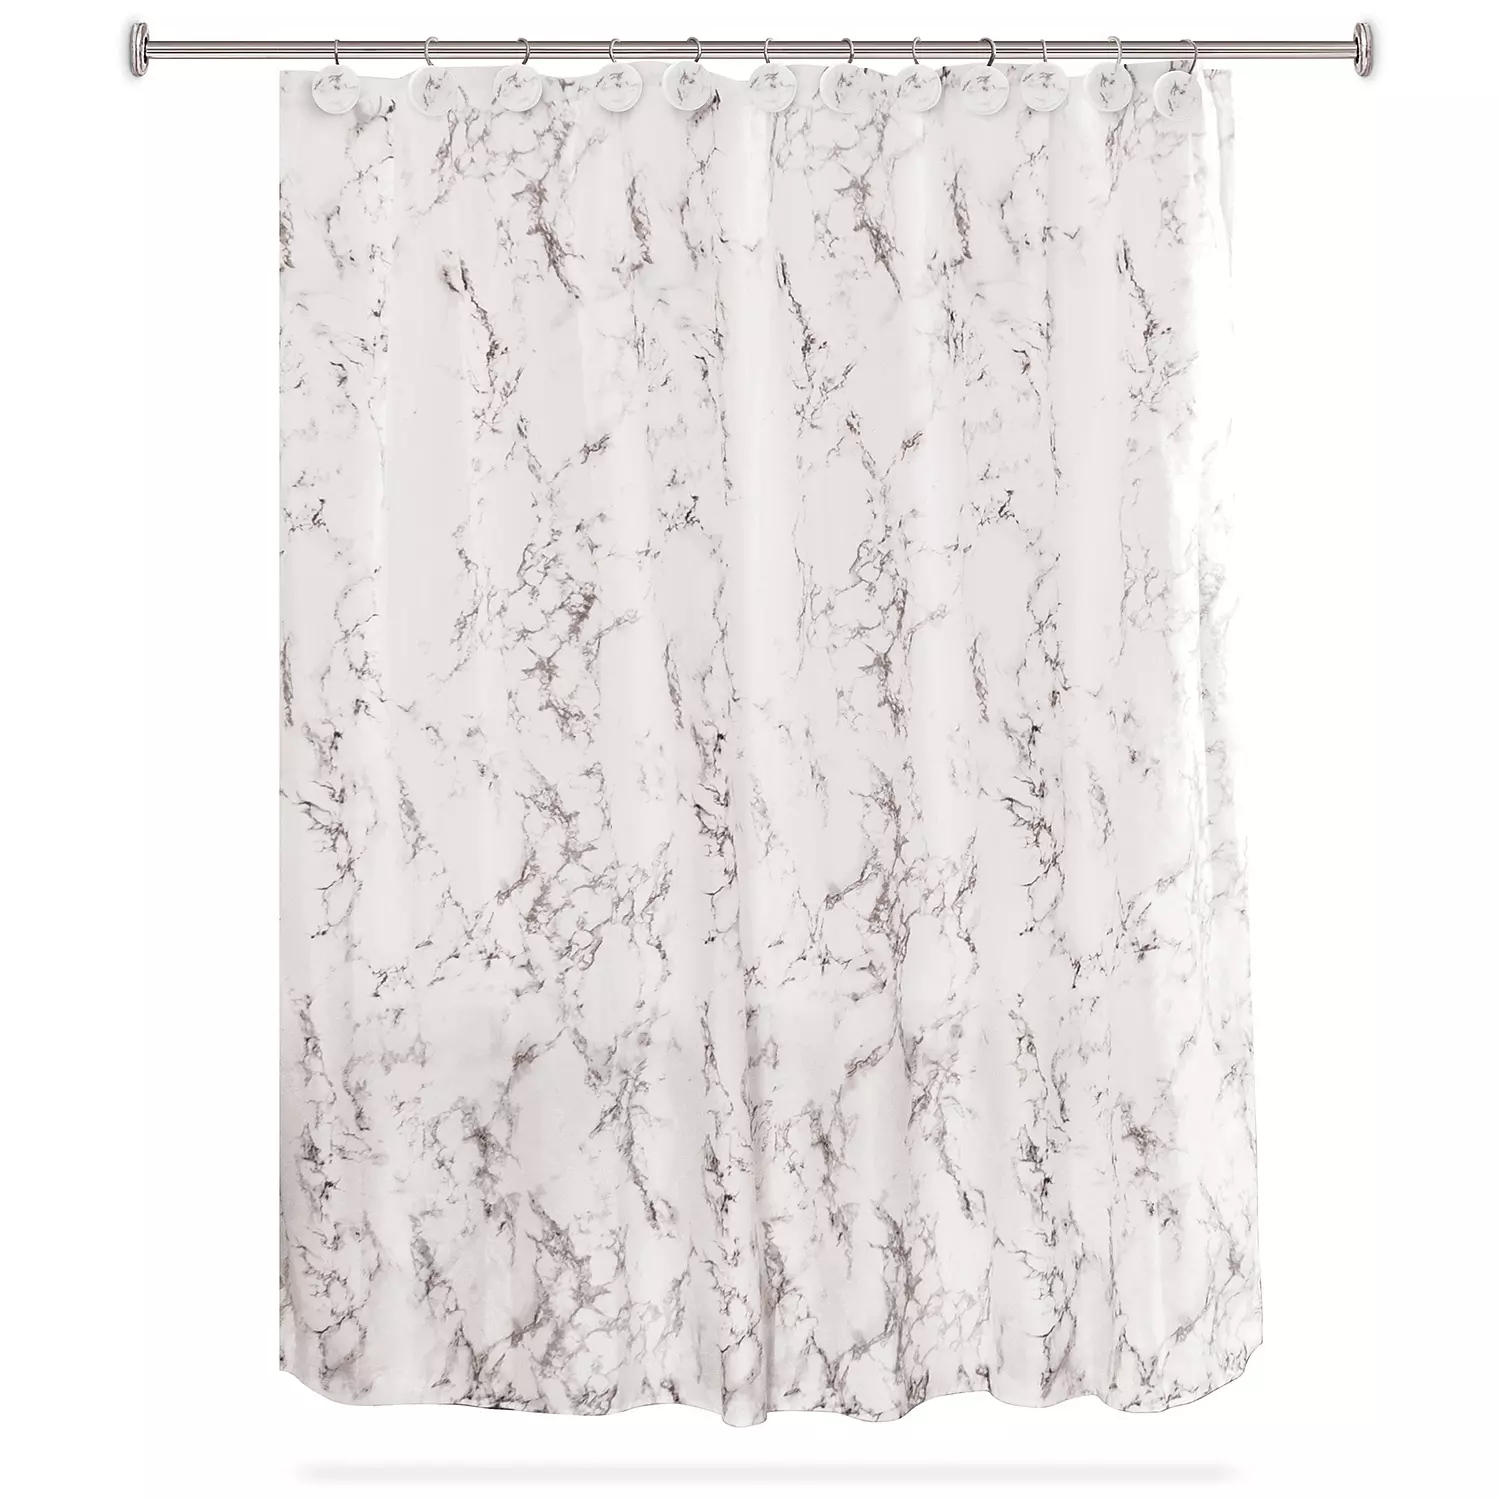 Splash Home Fabric Shower Curtain 70, Splash Home Fabric Shower Curtain Liner